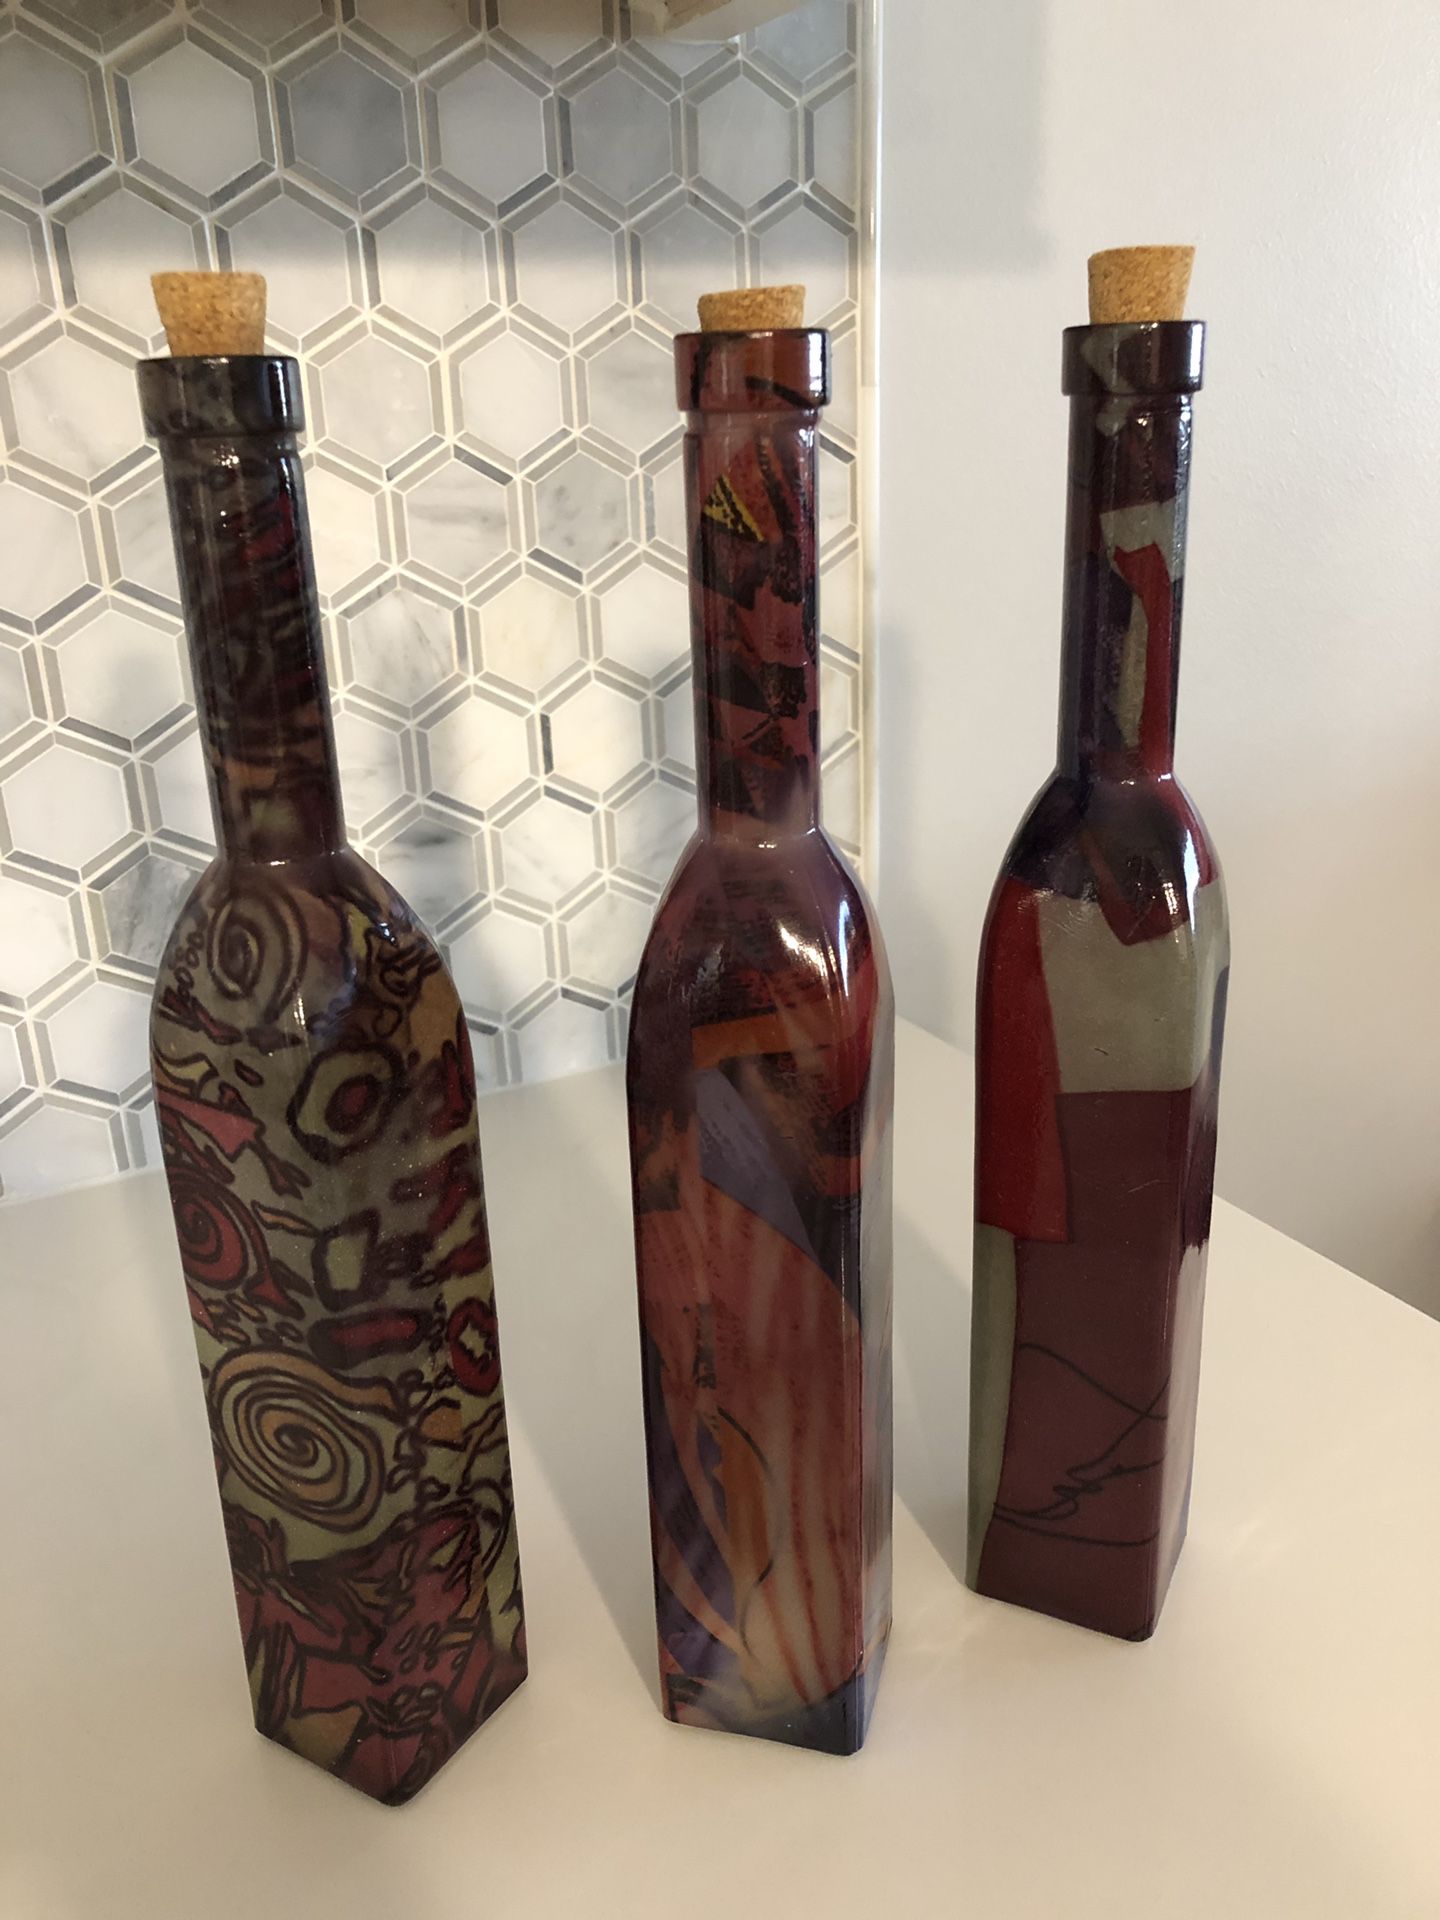 Painted glass decorative bottles